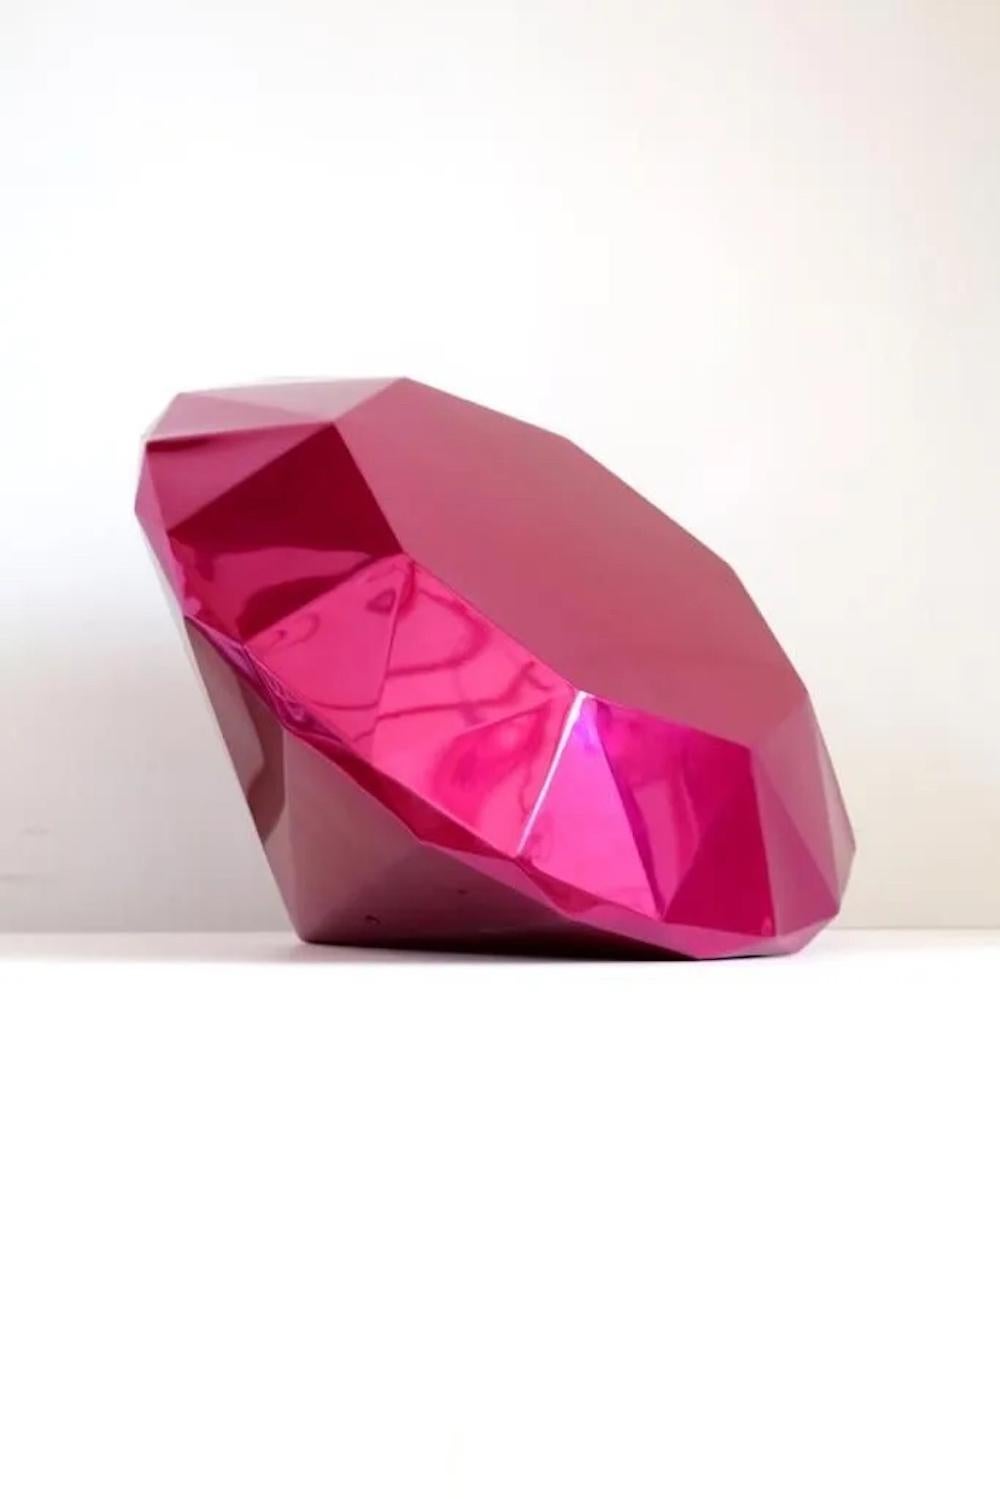 Pink Rose Diamond - Contemporary Sculpture by David Uessem